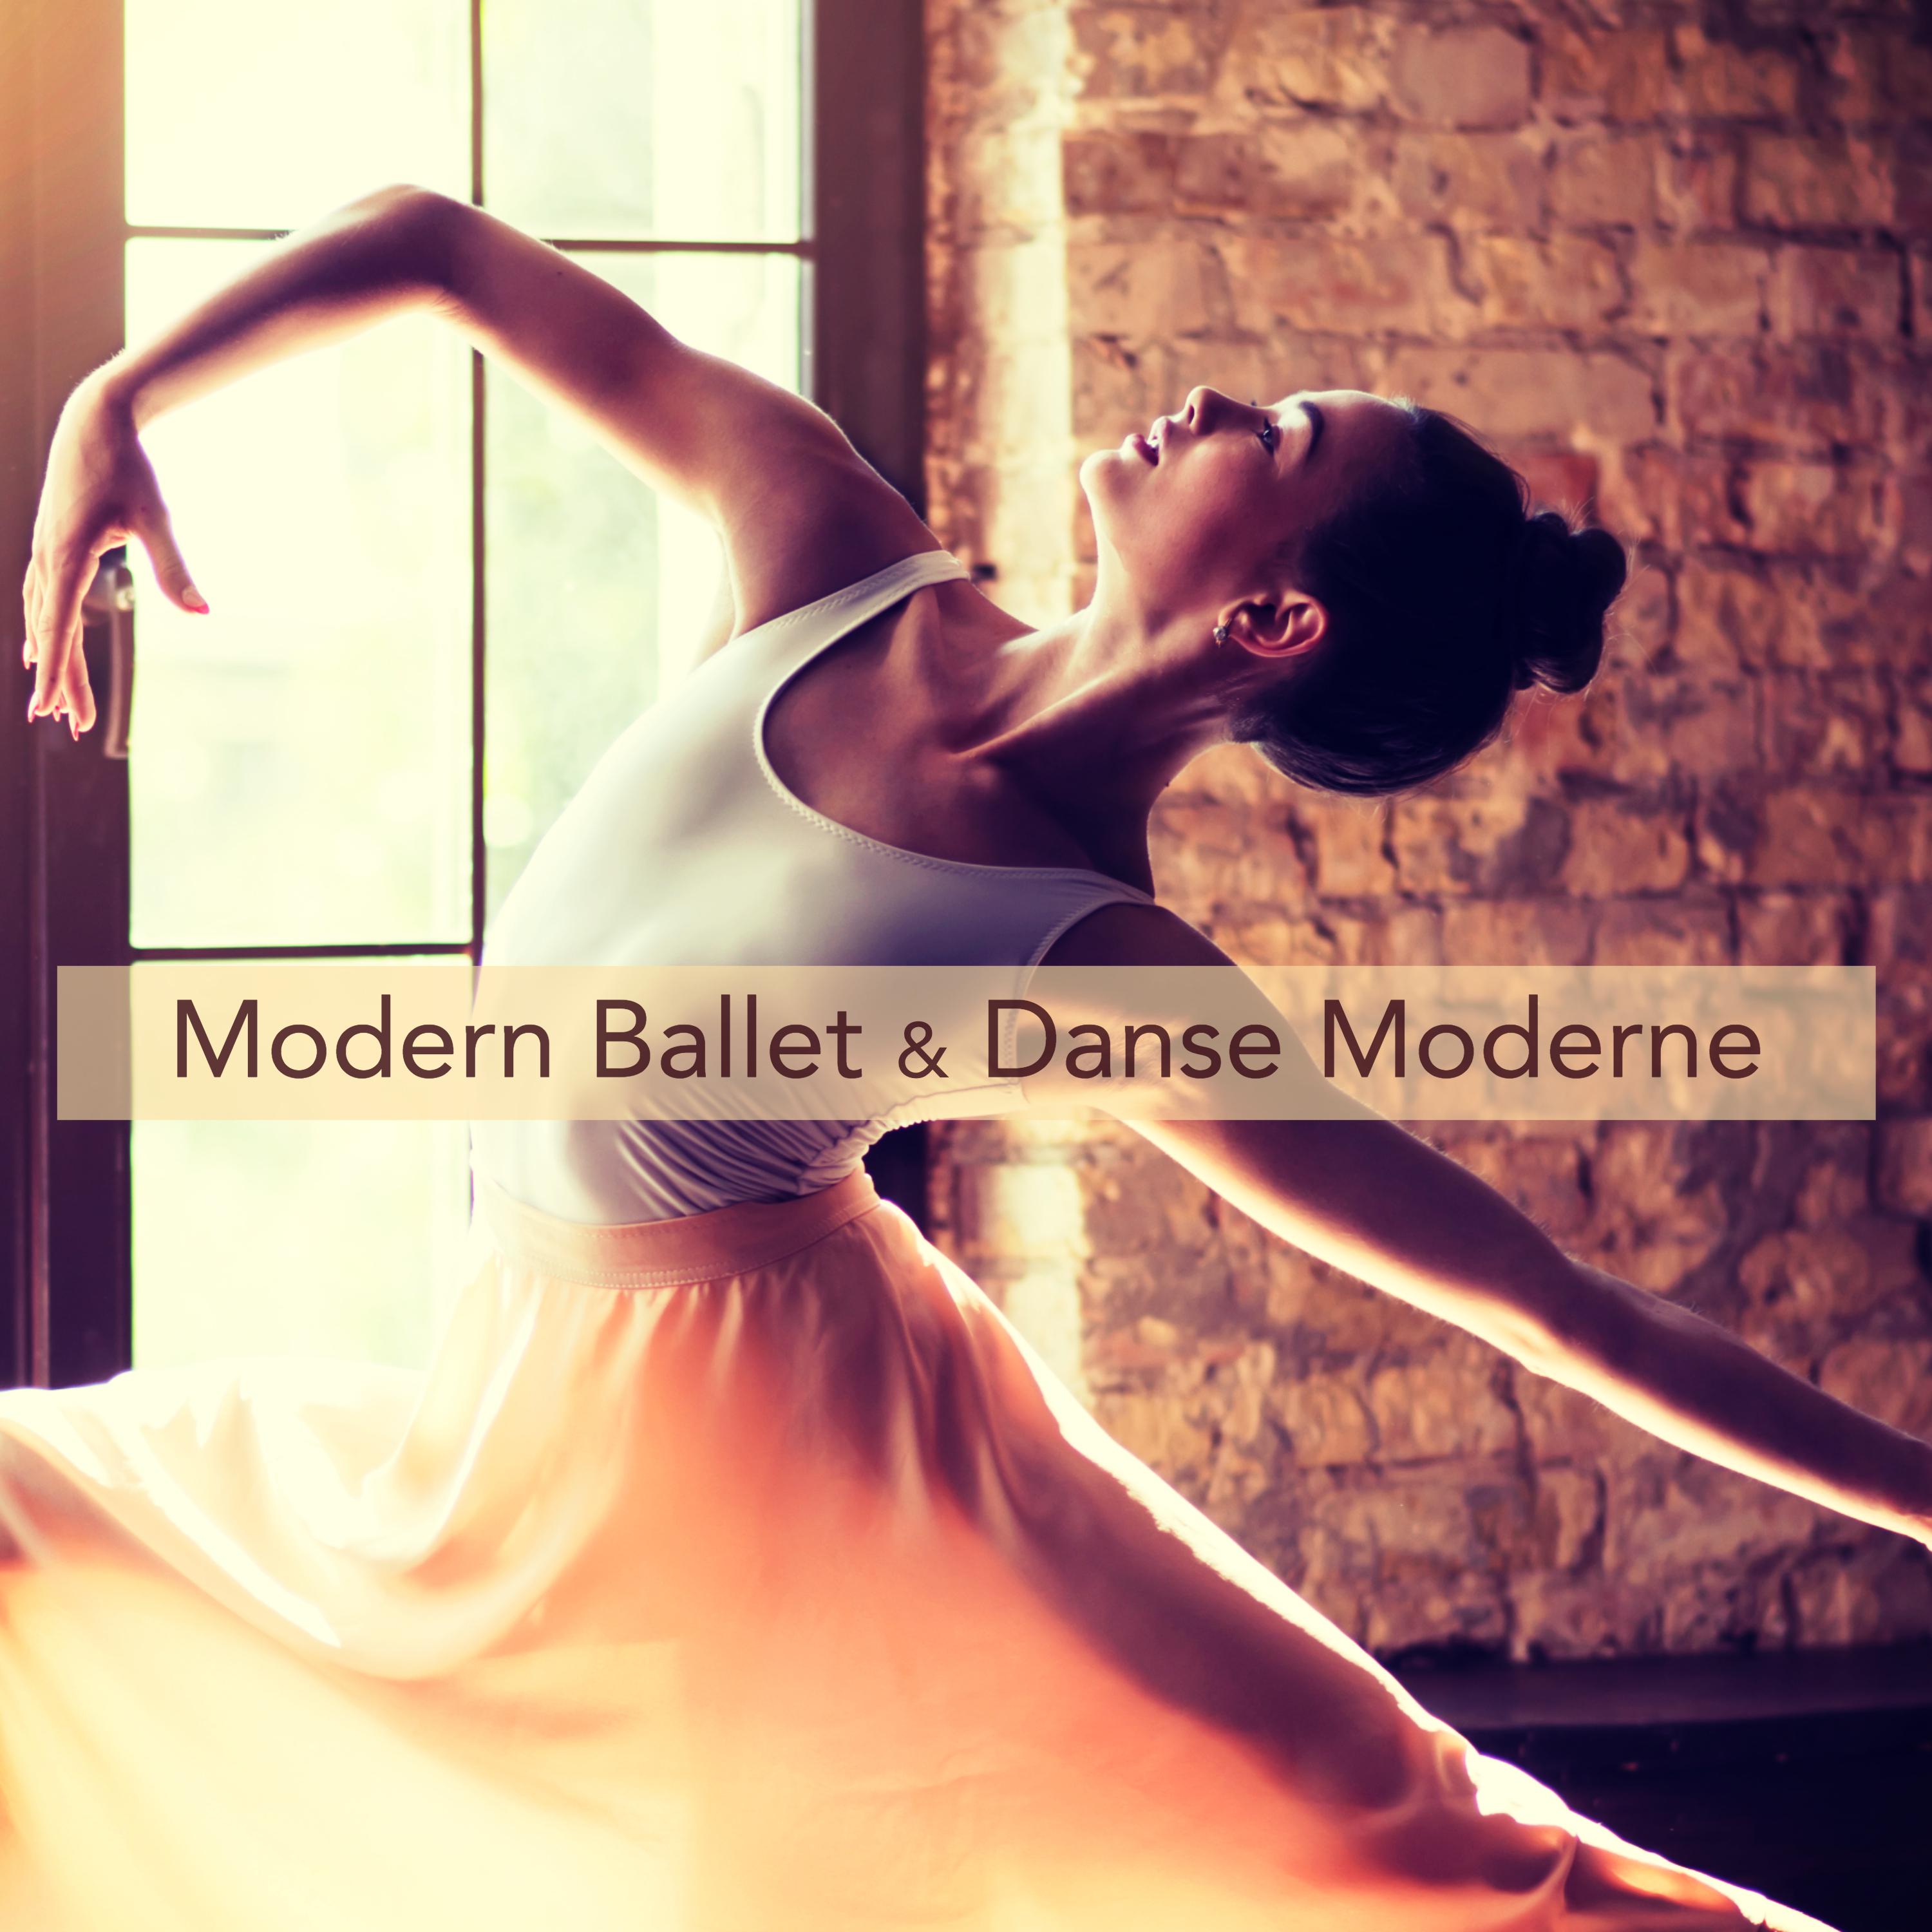 Modern Ballet  Danse Moderne  Chillout  Piano Collection for Modern Ballet, Jazz Dance, Danse Contemporaine  Ballet Moderne